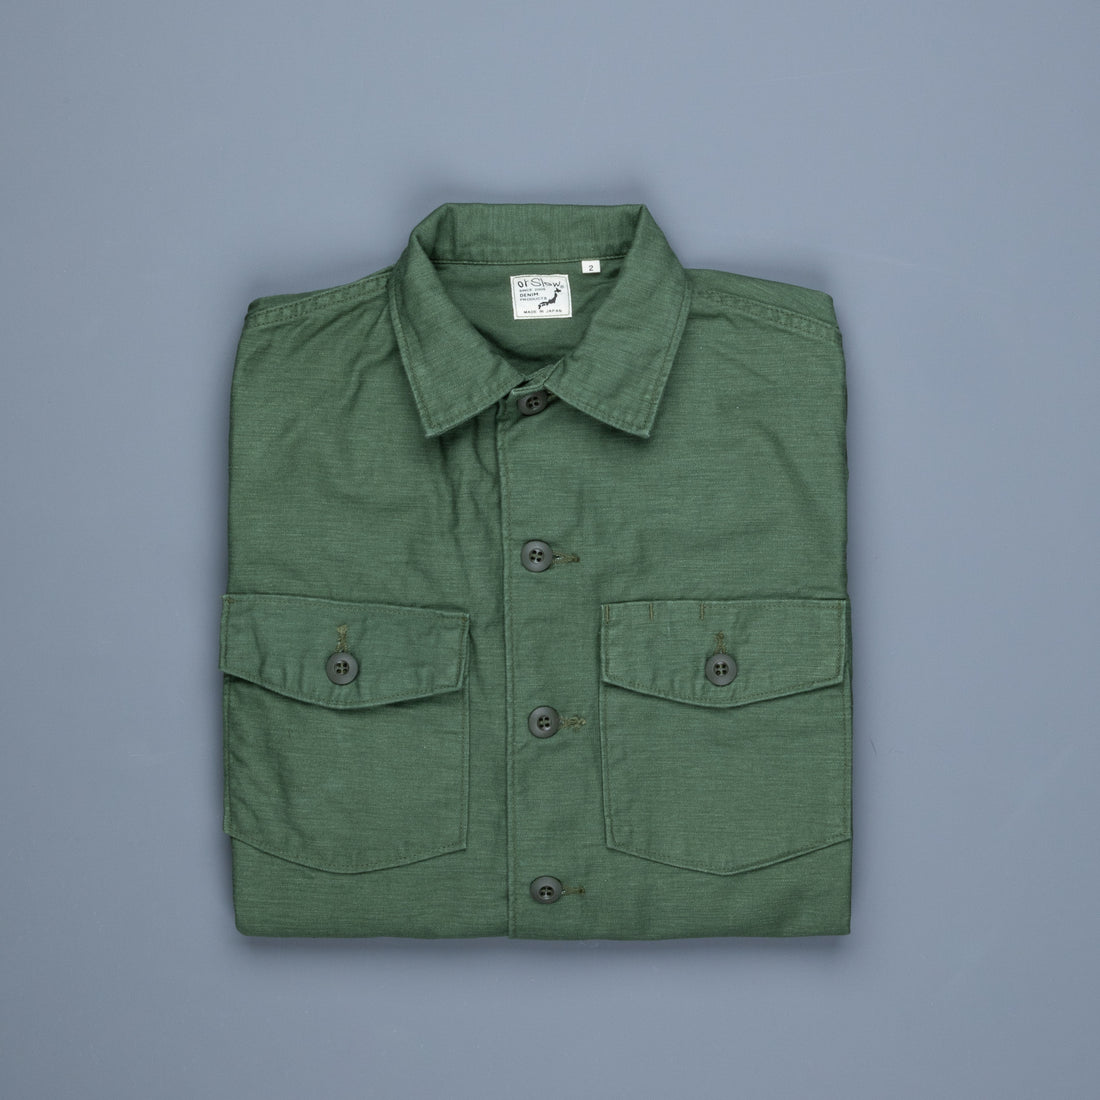 Orslow US army shirt back satin green